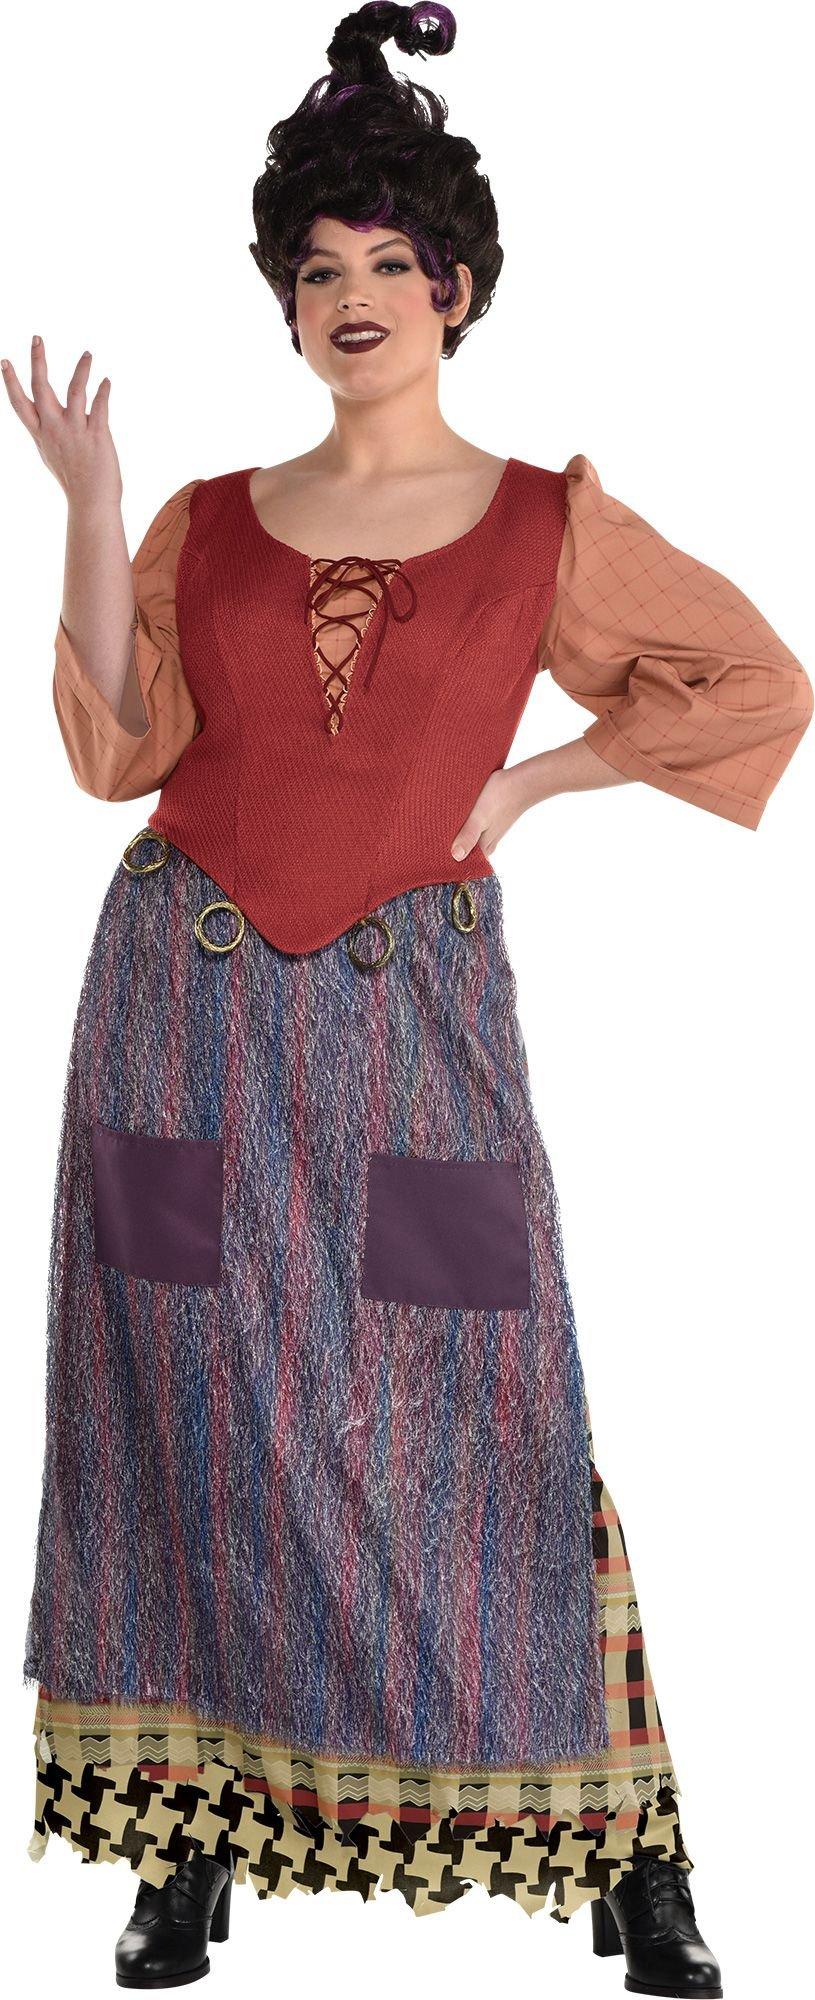 Adult Mary Sanderson Costume Plus Size - Disney Hocus Pocus | Party City